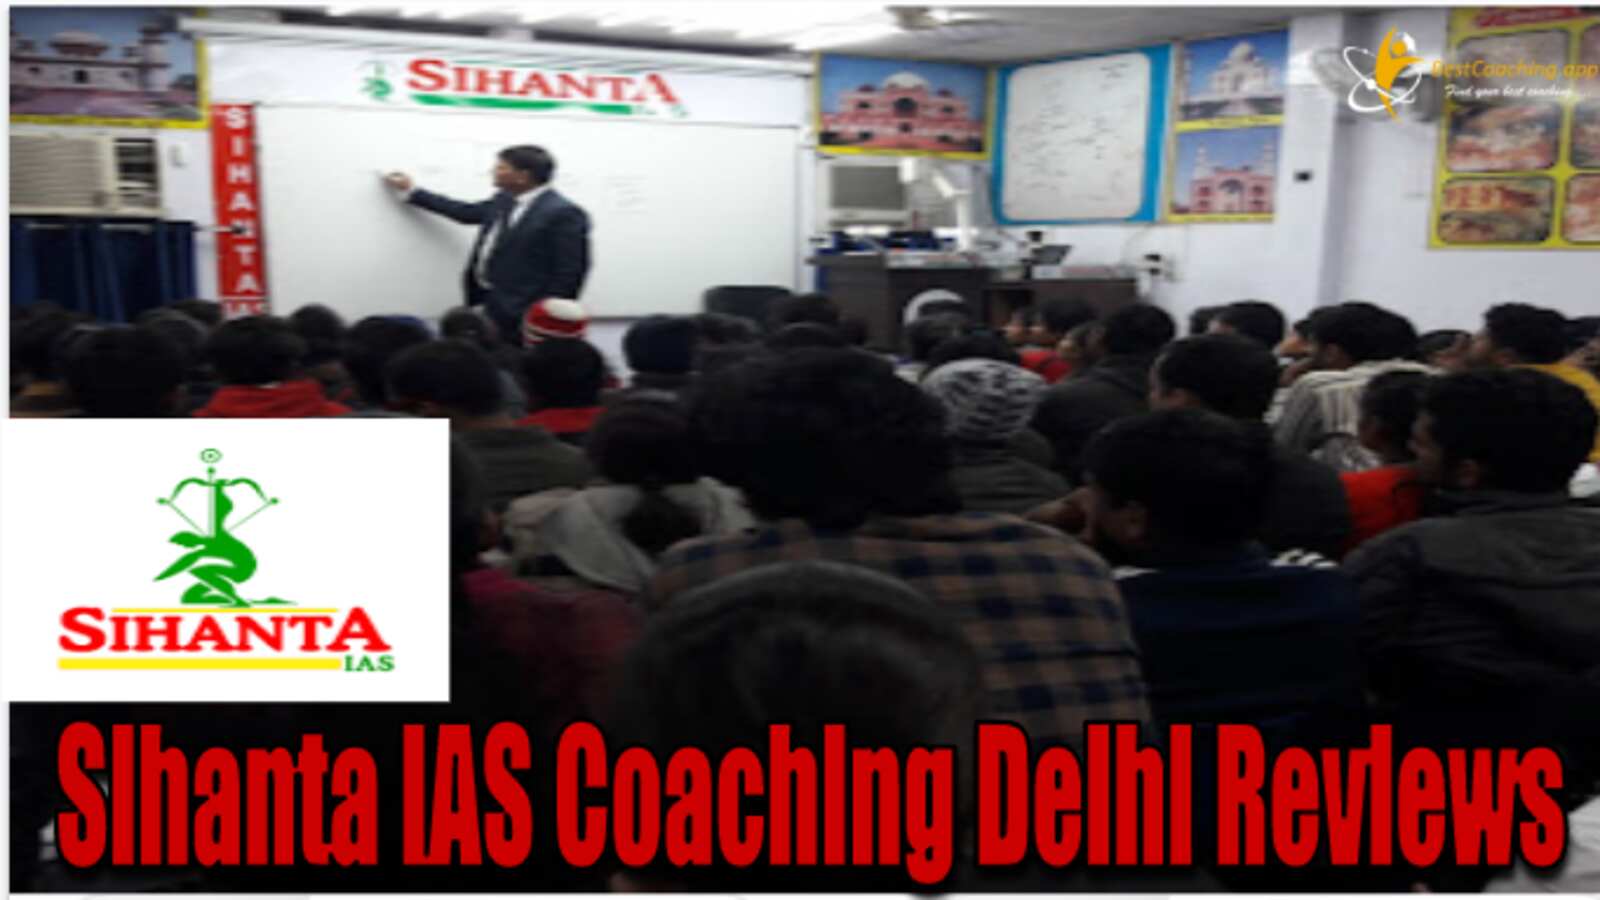 Sihanta IAS Coaching Institute Delhi Reviews